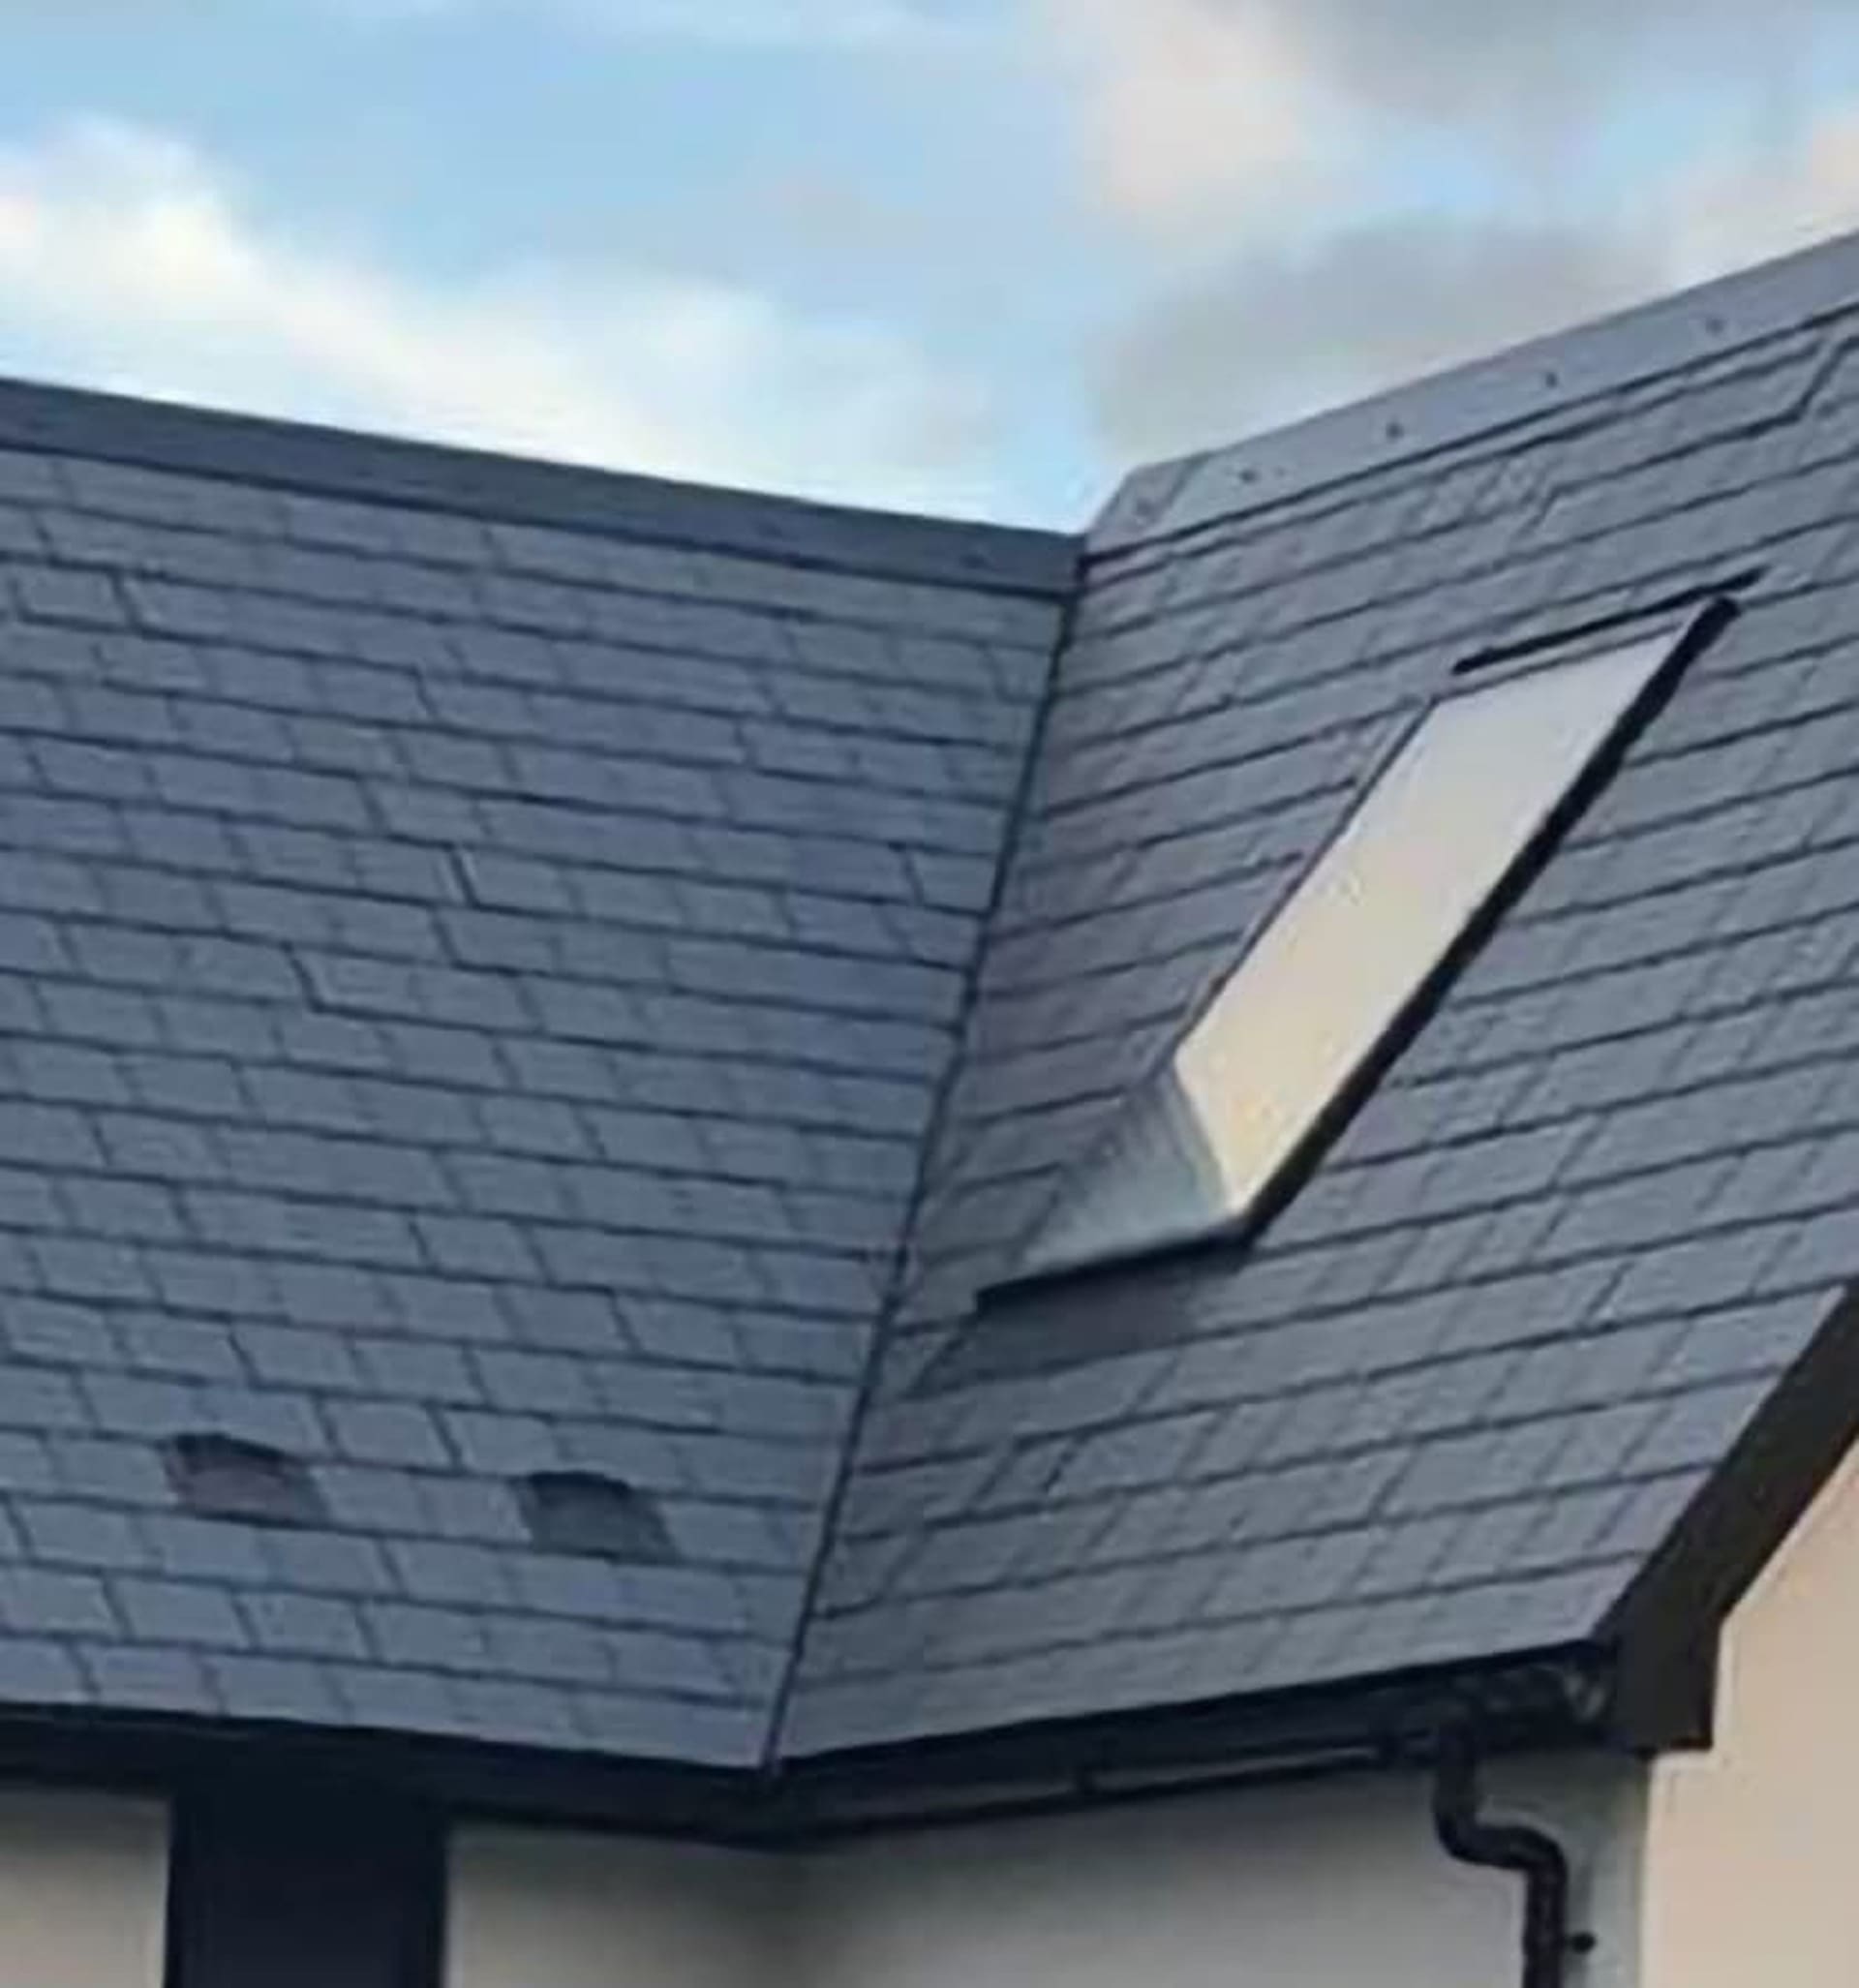 pitched shingle roof aluminum windows London